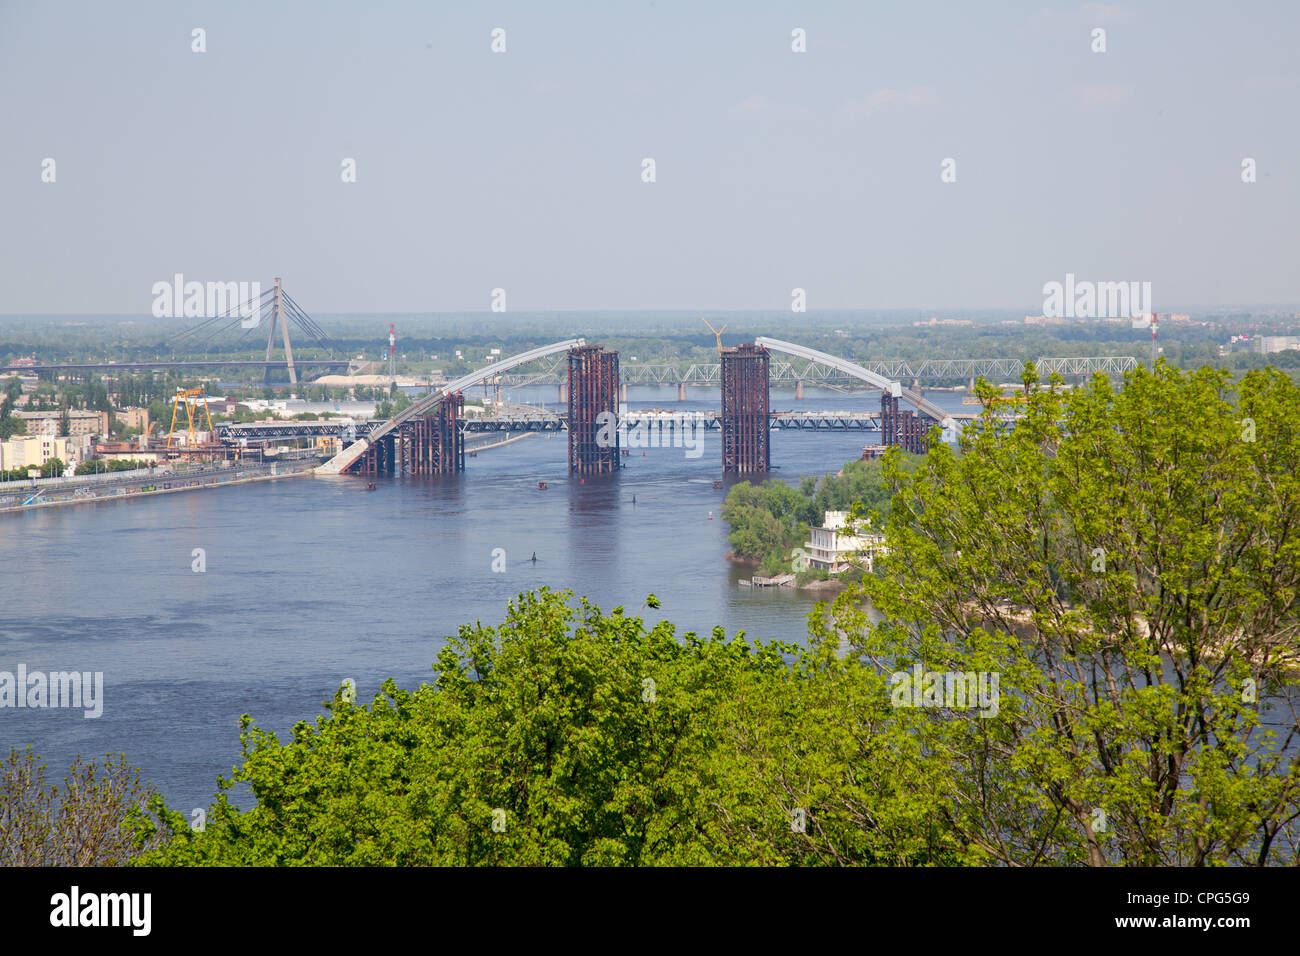 Kiev dnieper river and bridge throught trees Stock Photo